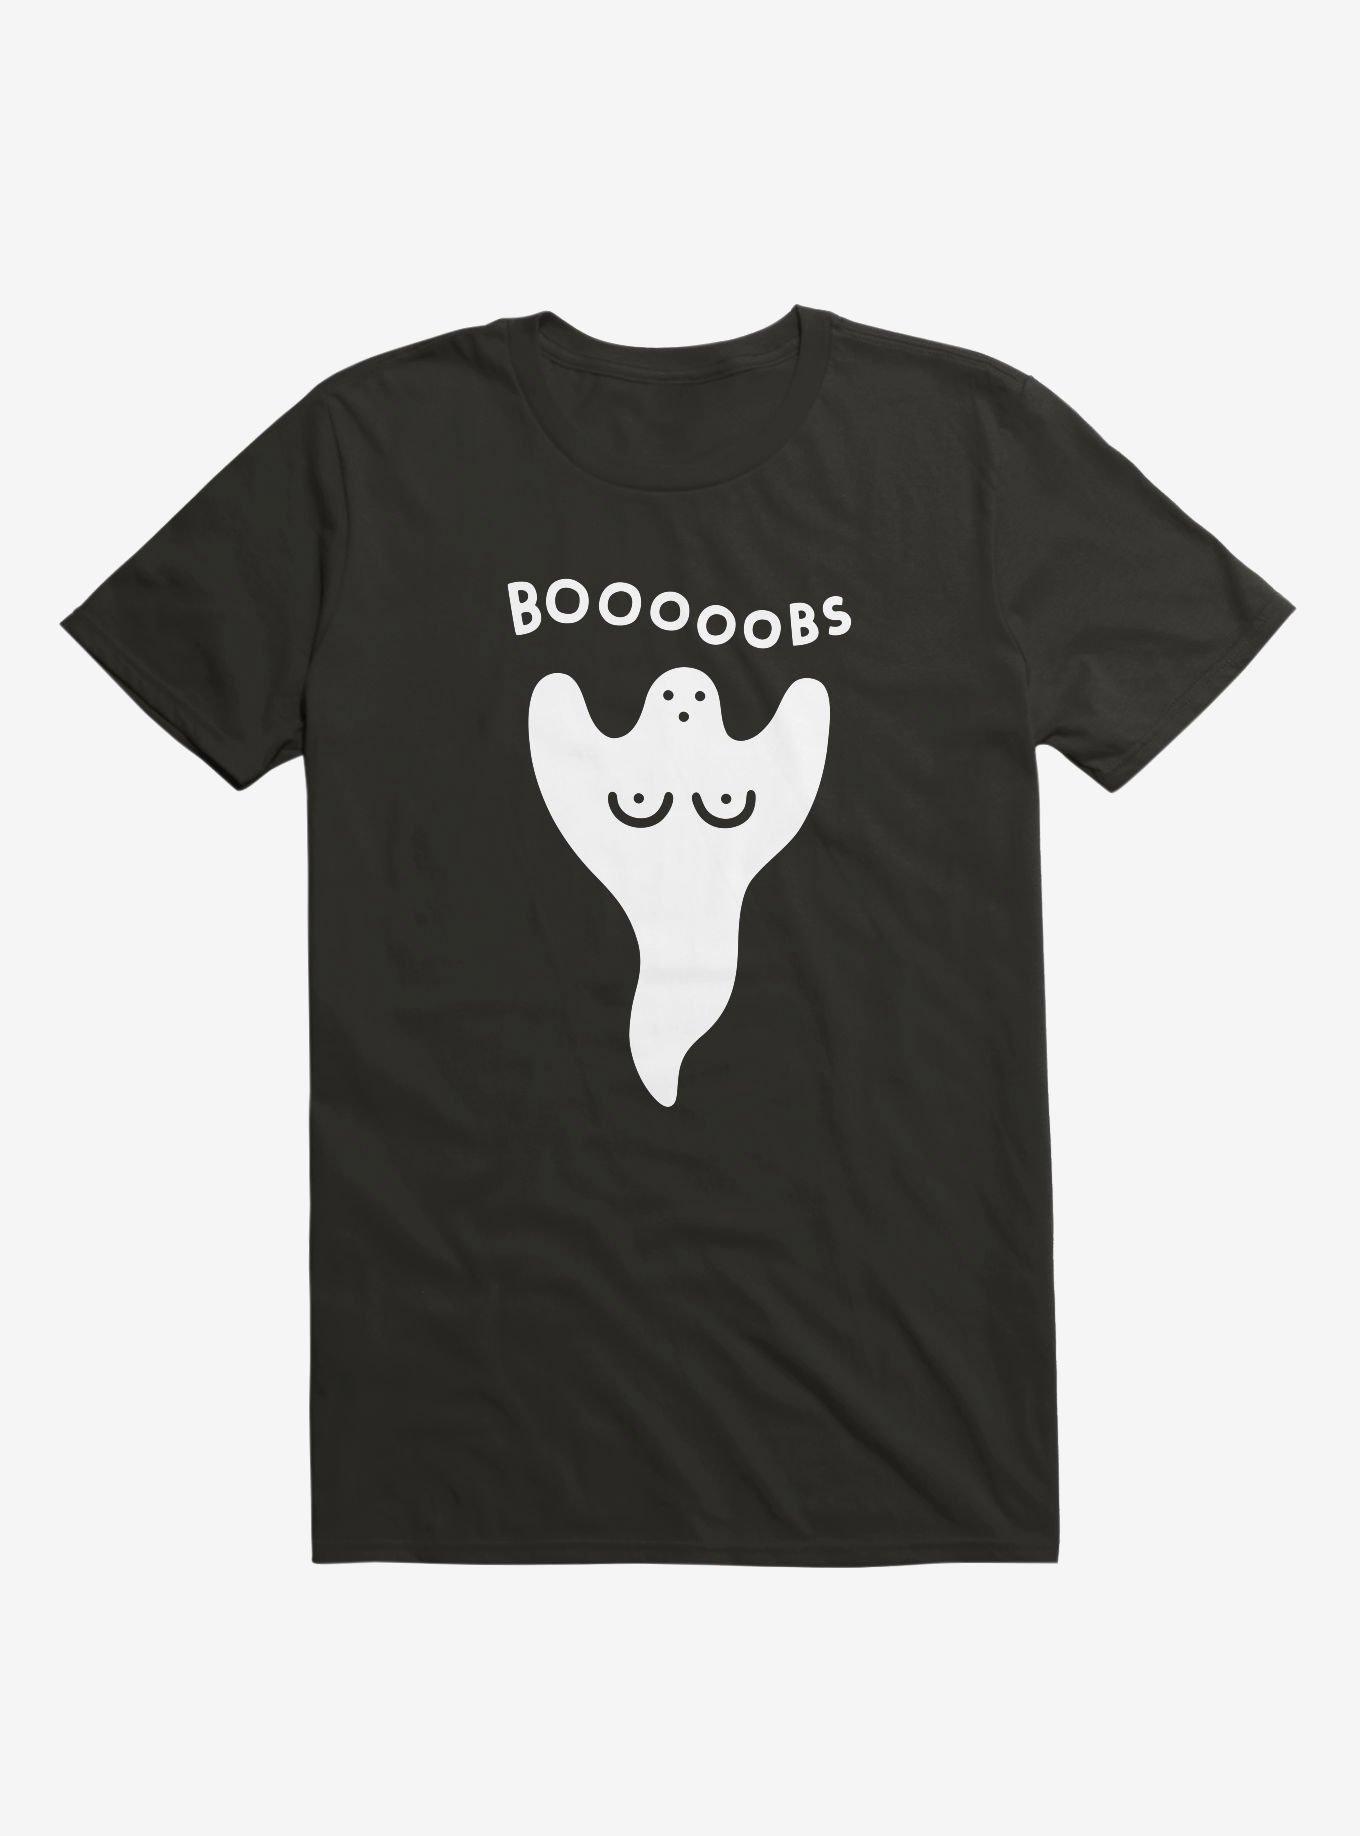 Punk Boob T Shirt -  Canada